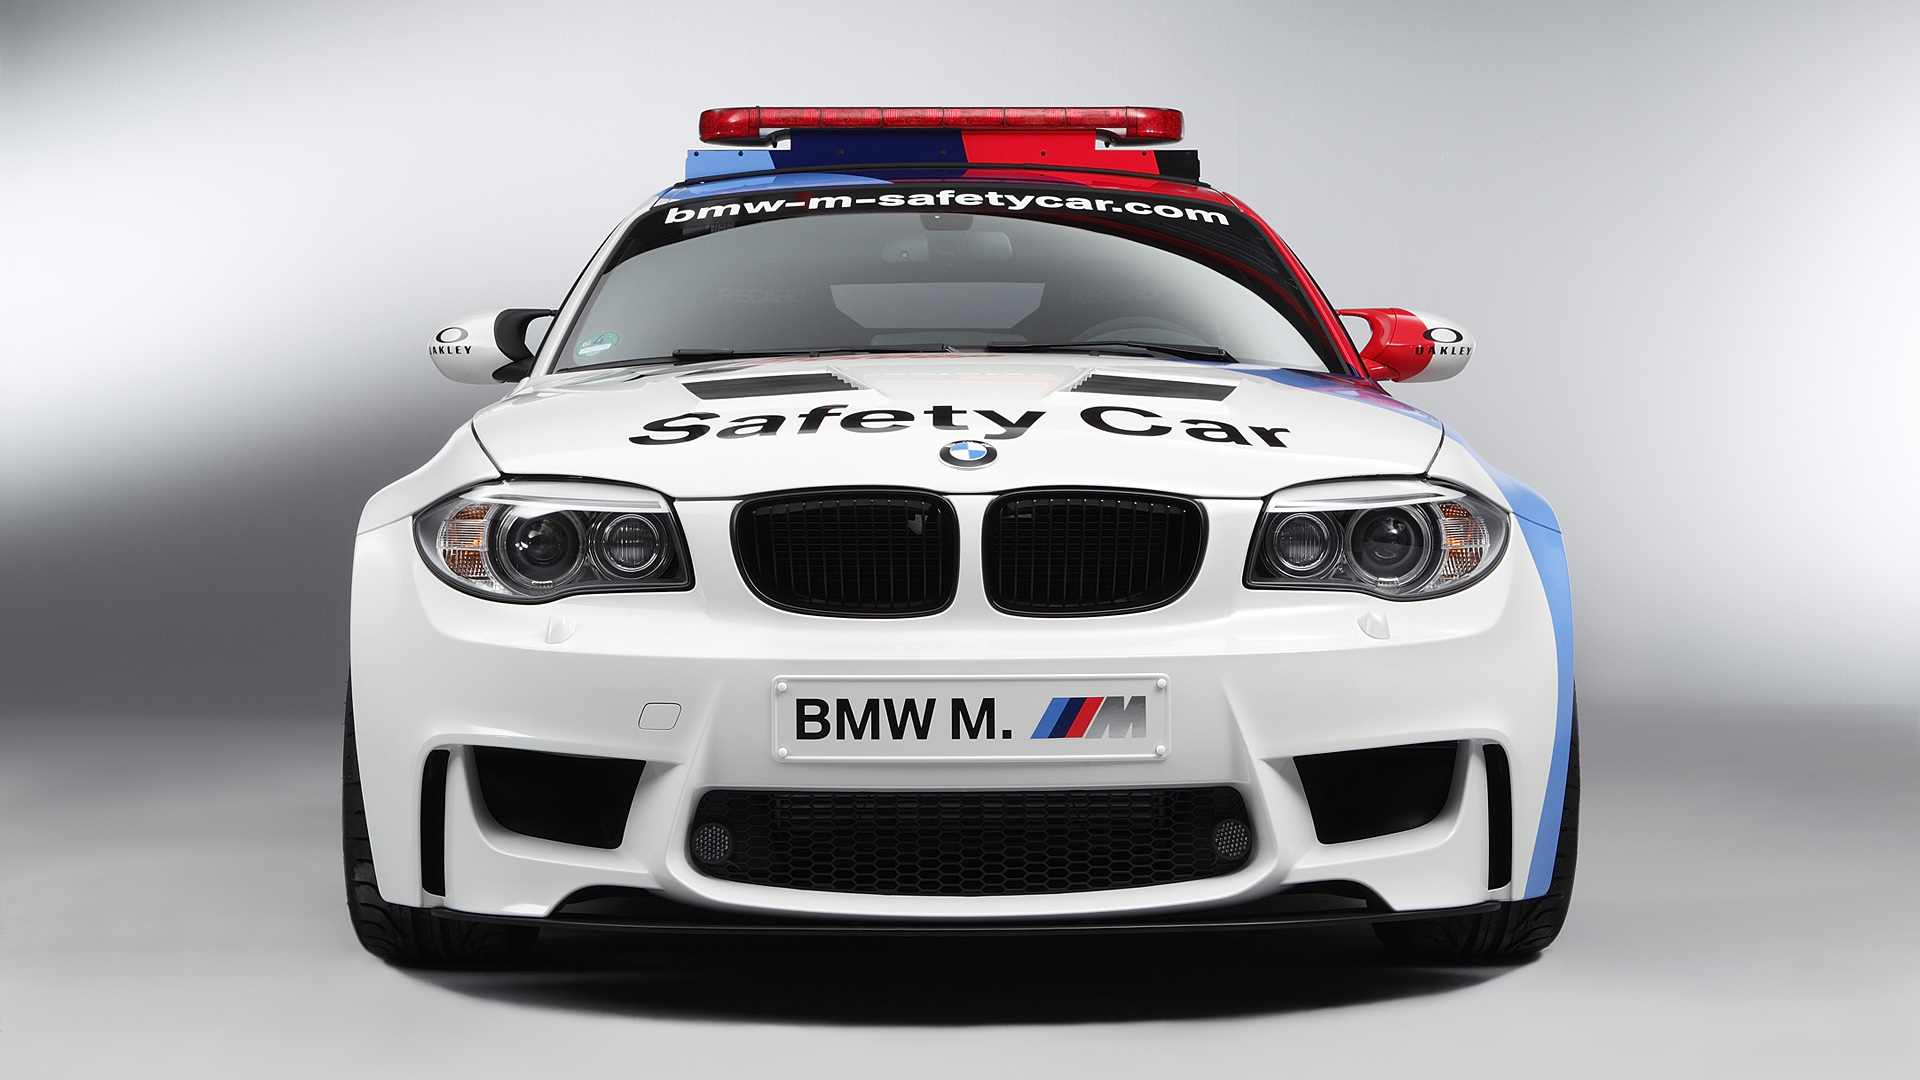  2011 BMW 1-Series M Coupe MotoGP Safety Car Wallpaper.